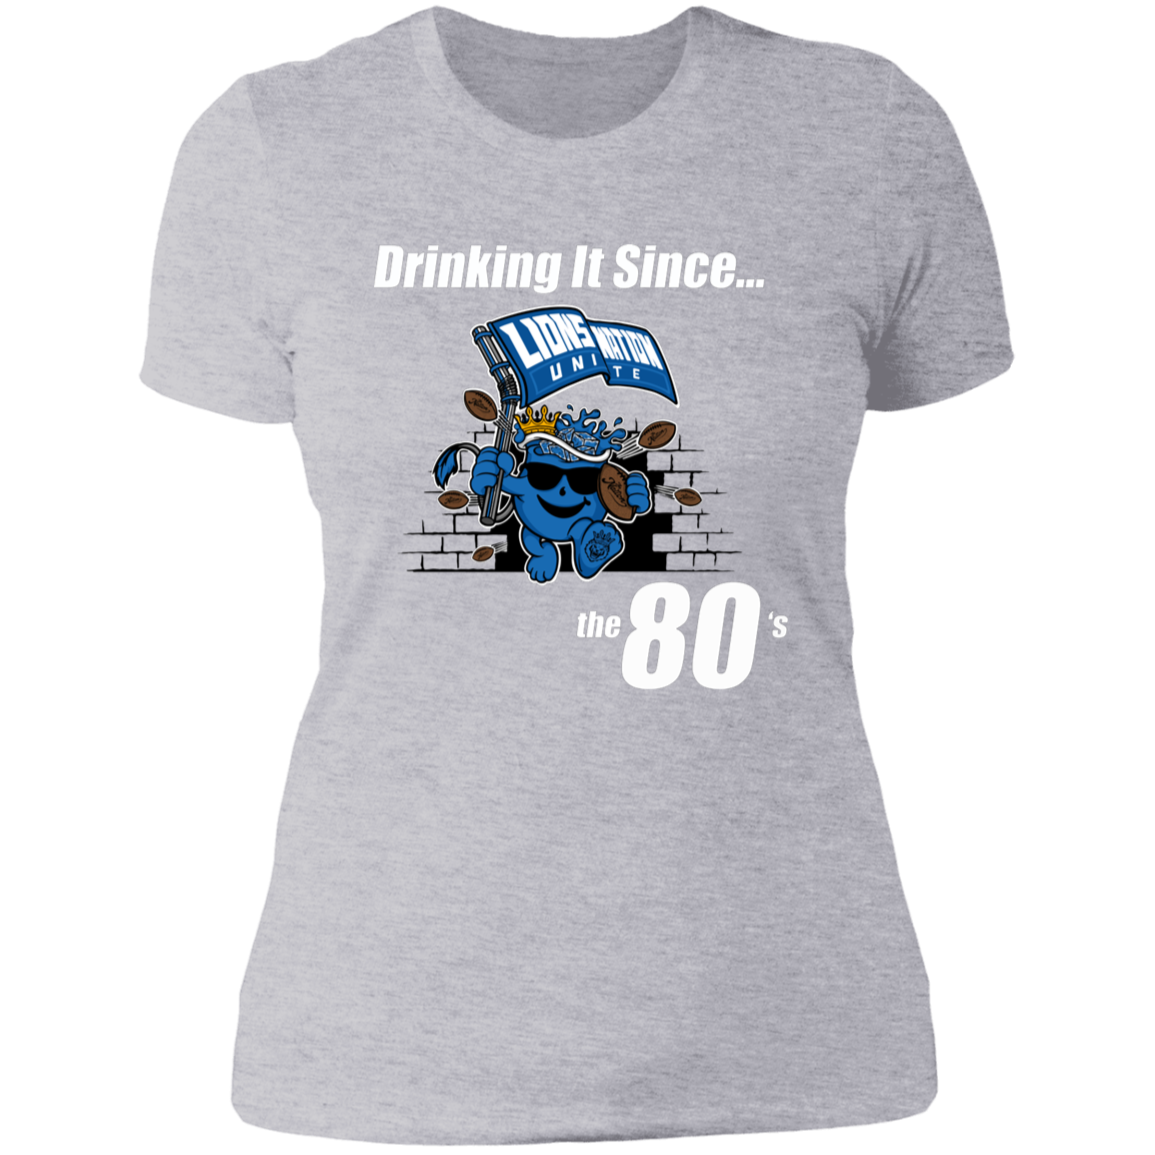 Drinking It Since the 80's Women's T-Shirt